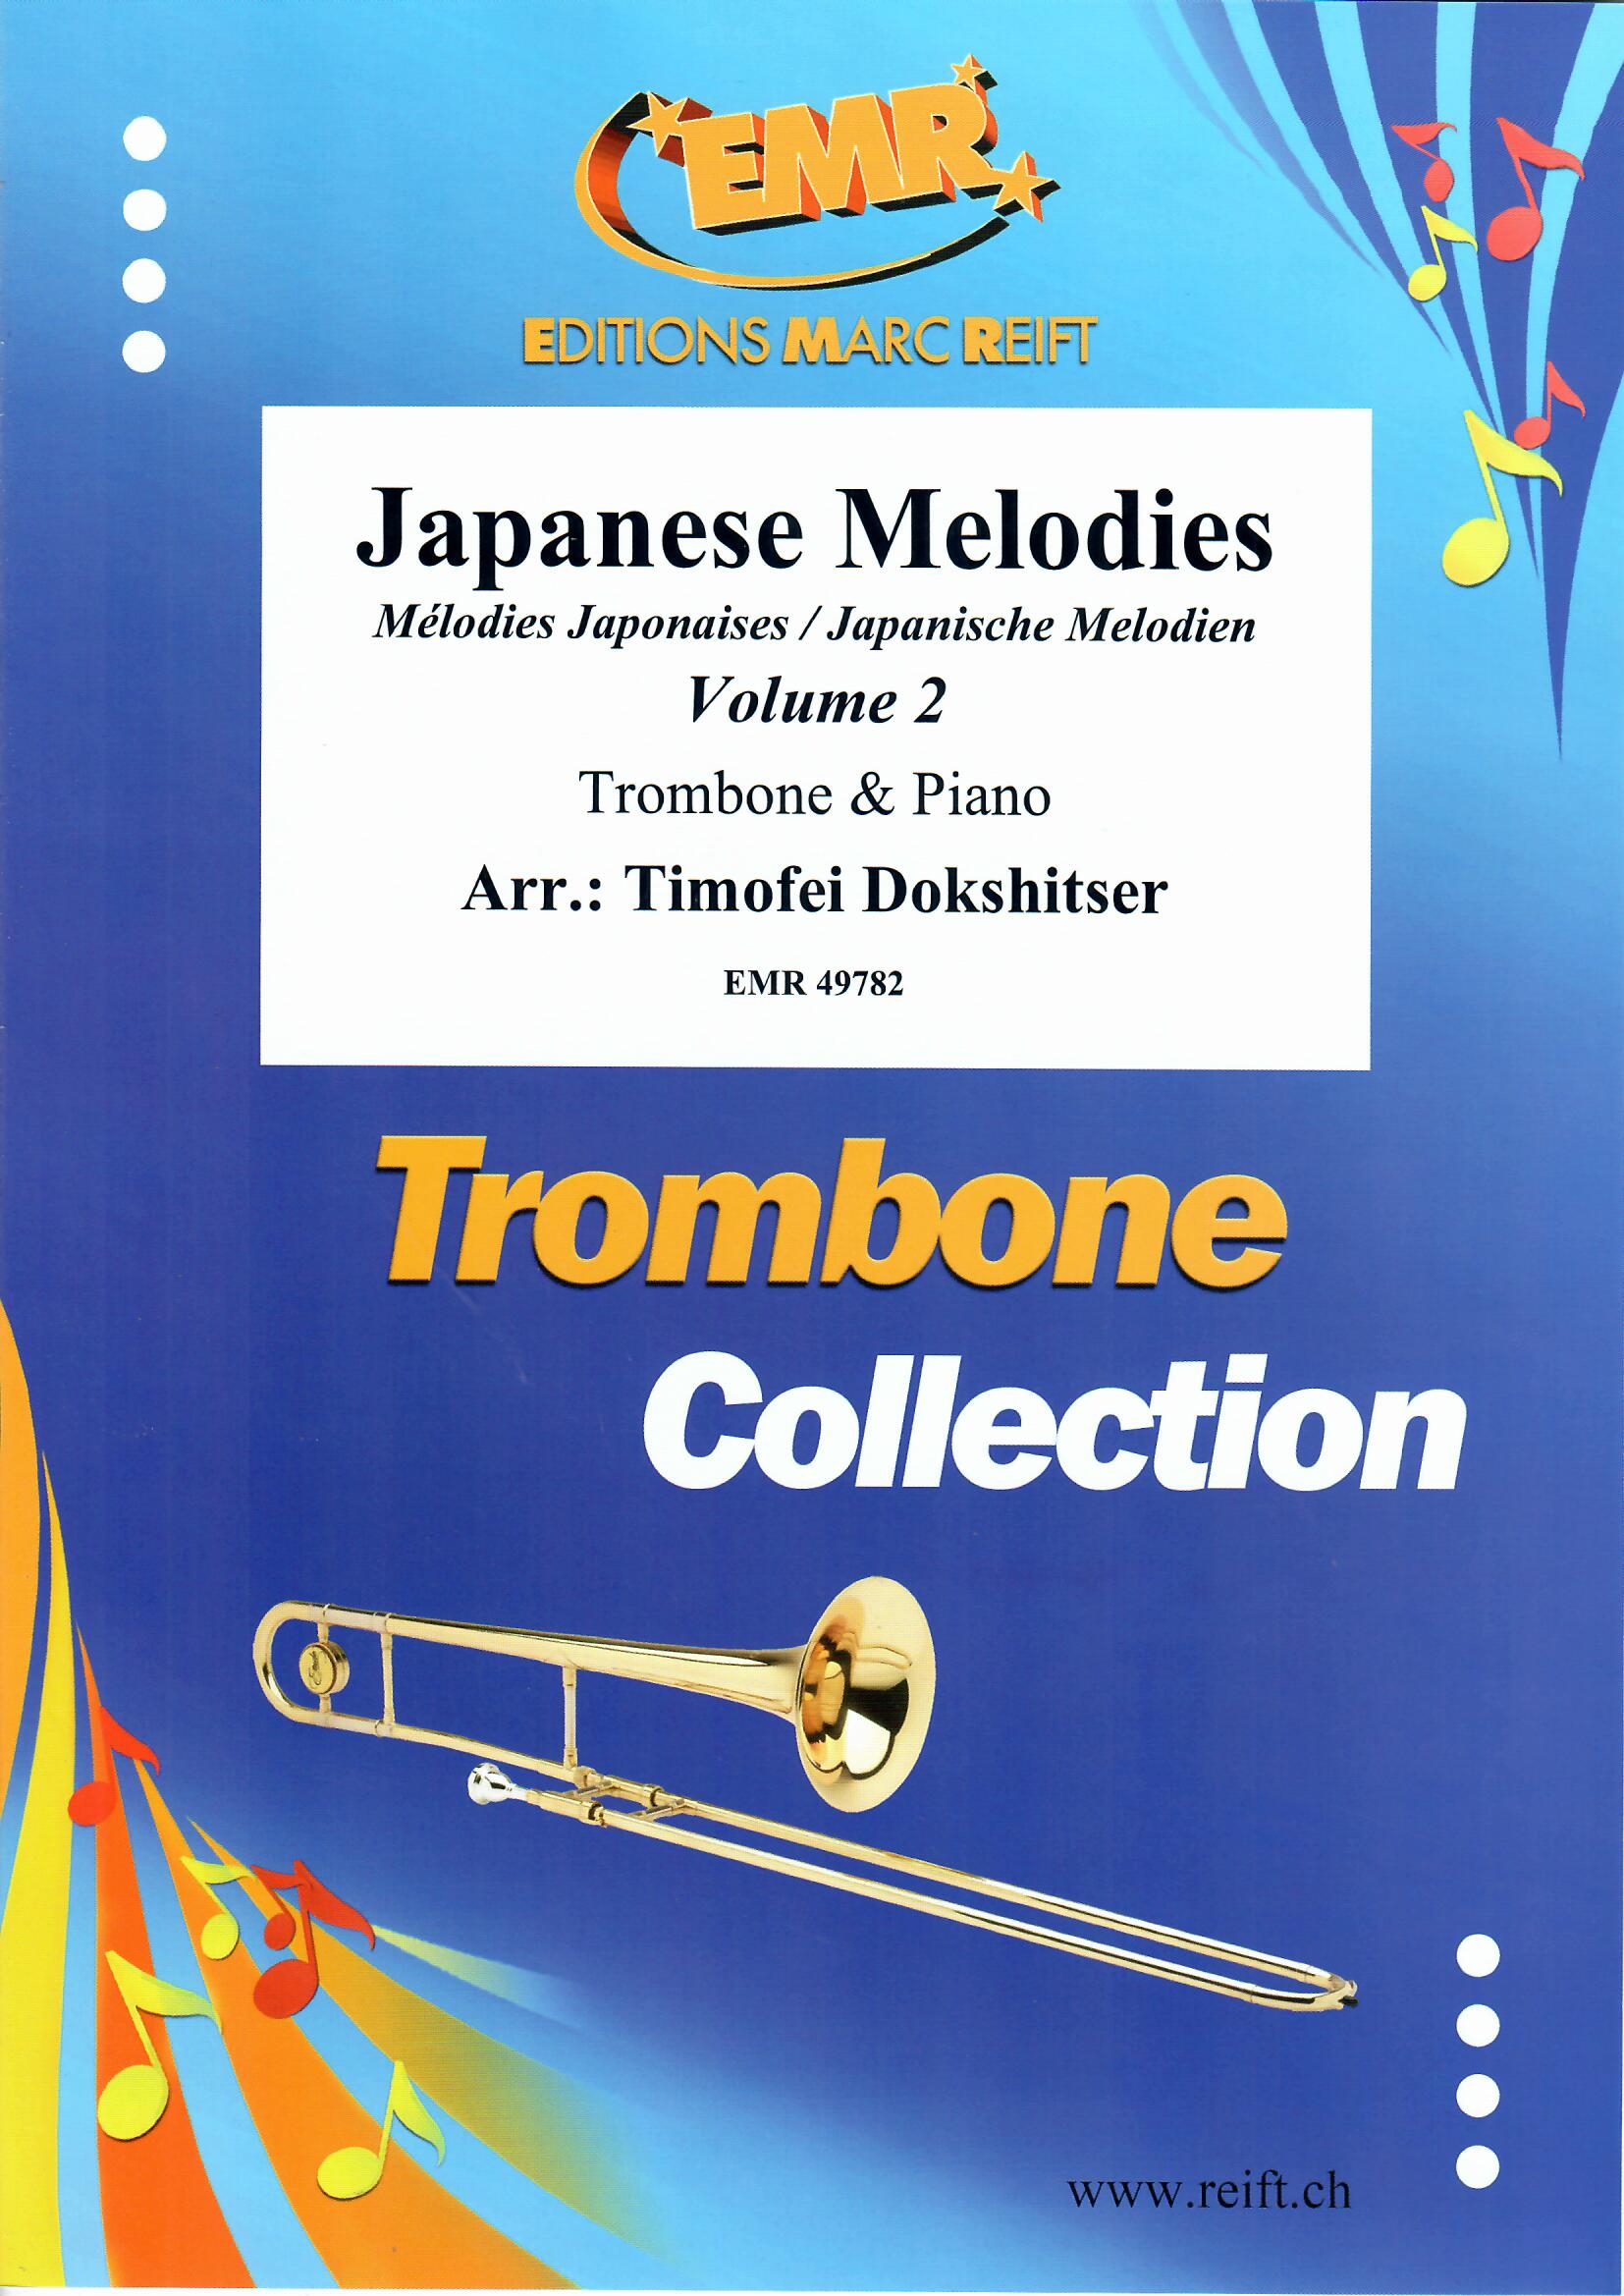 JAPANESE MELODIES VOL. 2 - Trombone & Piano, SOLOS - Trombone